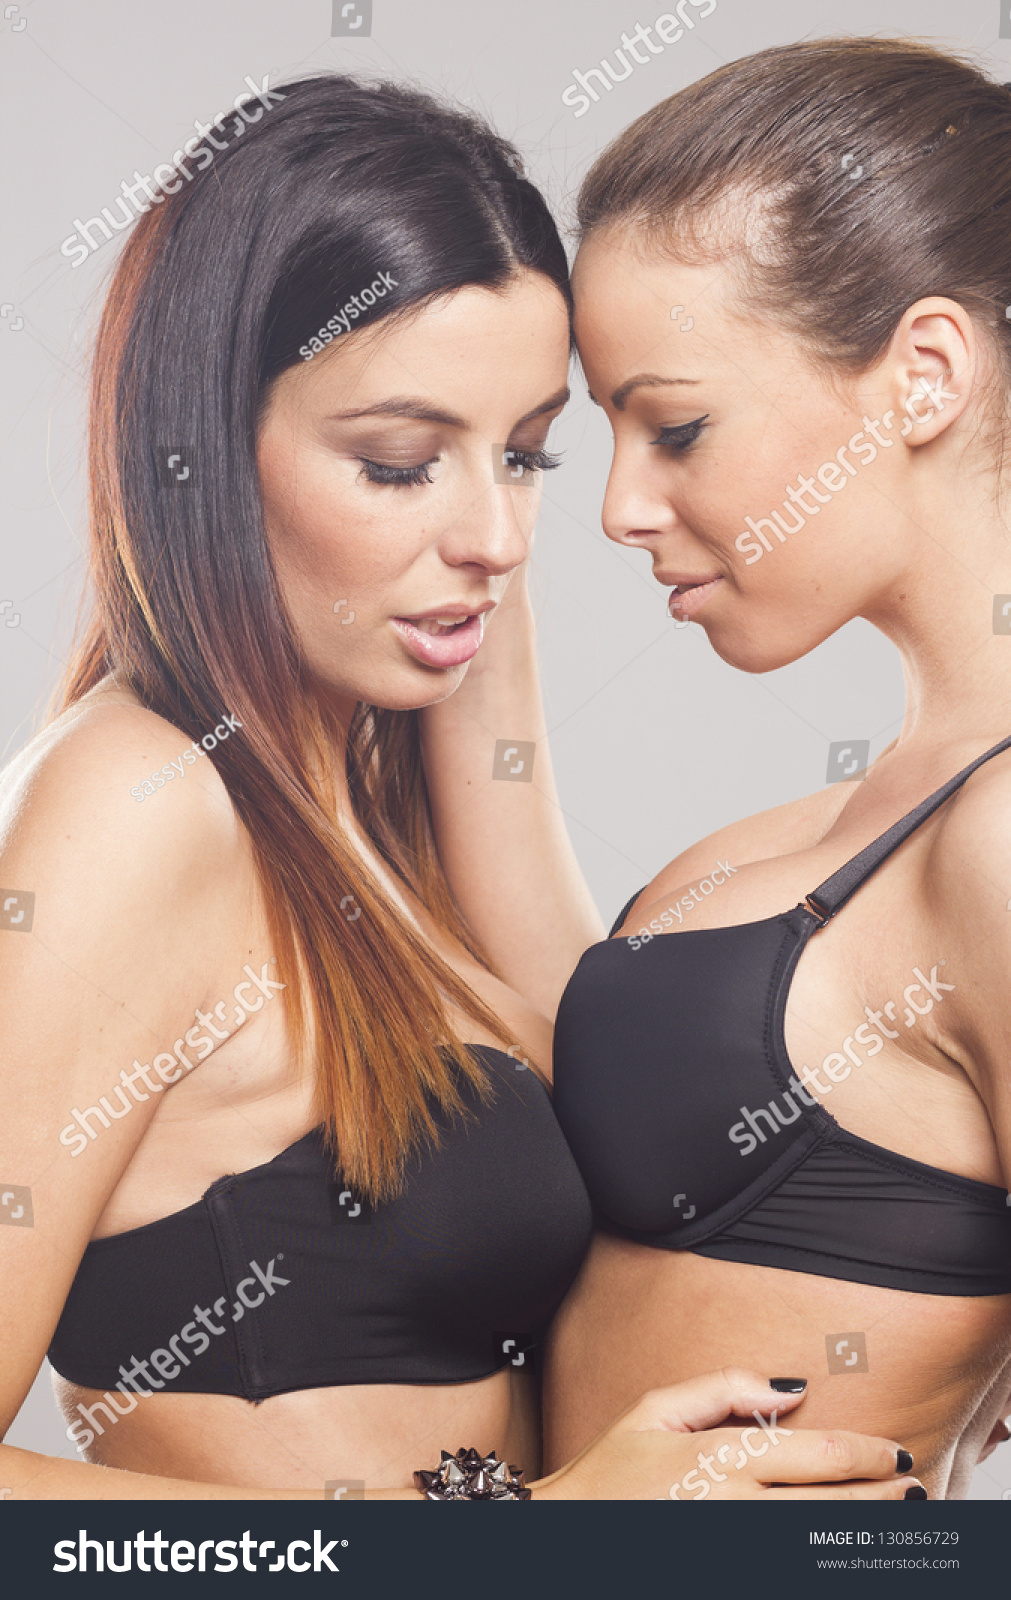 lesbians in lingerie